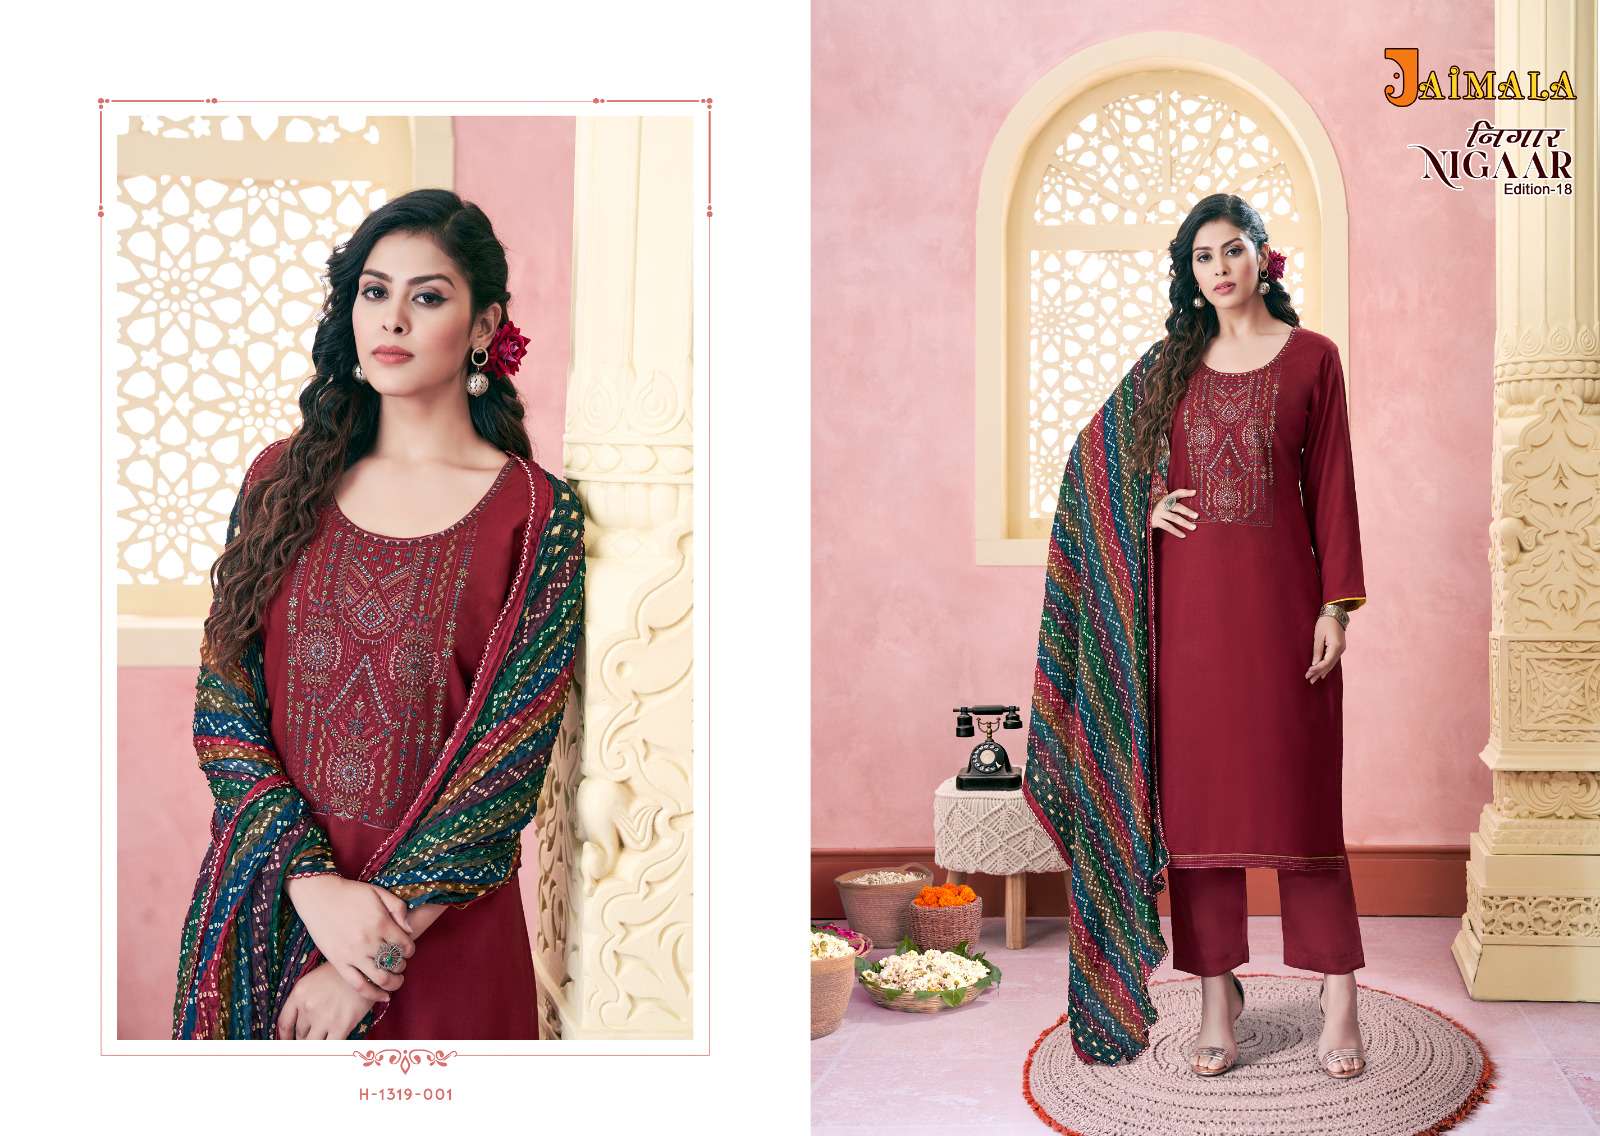 jaimala nigaar edition vol-18 rayon designer salwar suits catalogue online dealer surat